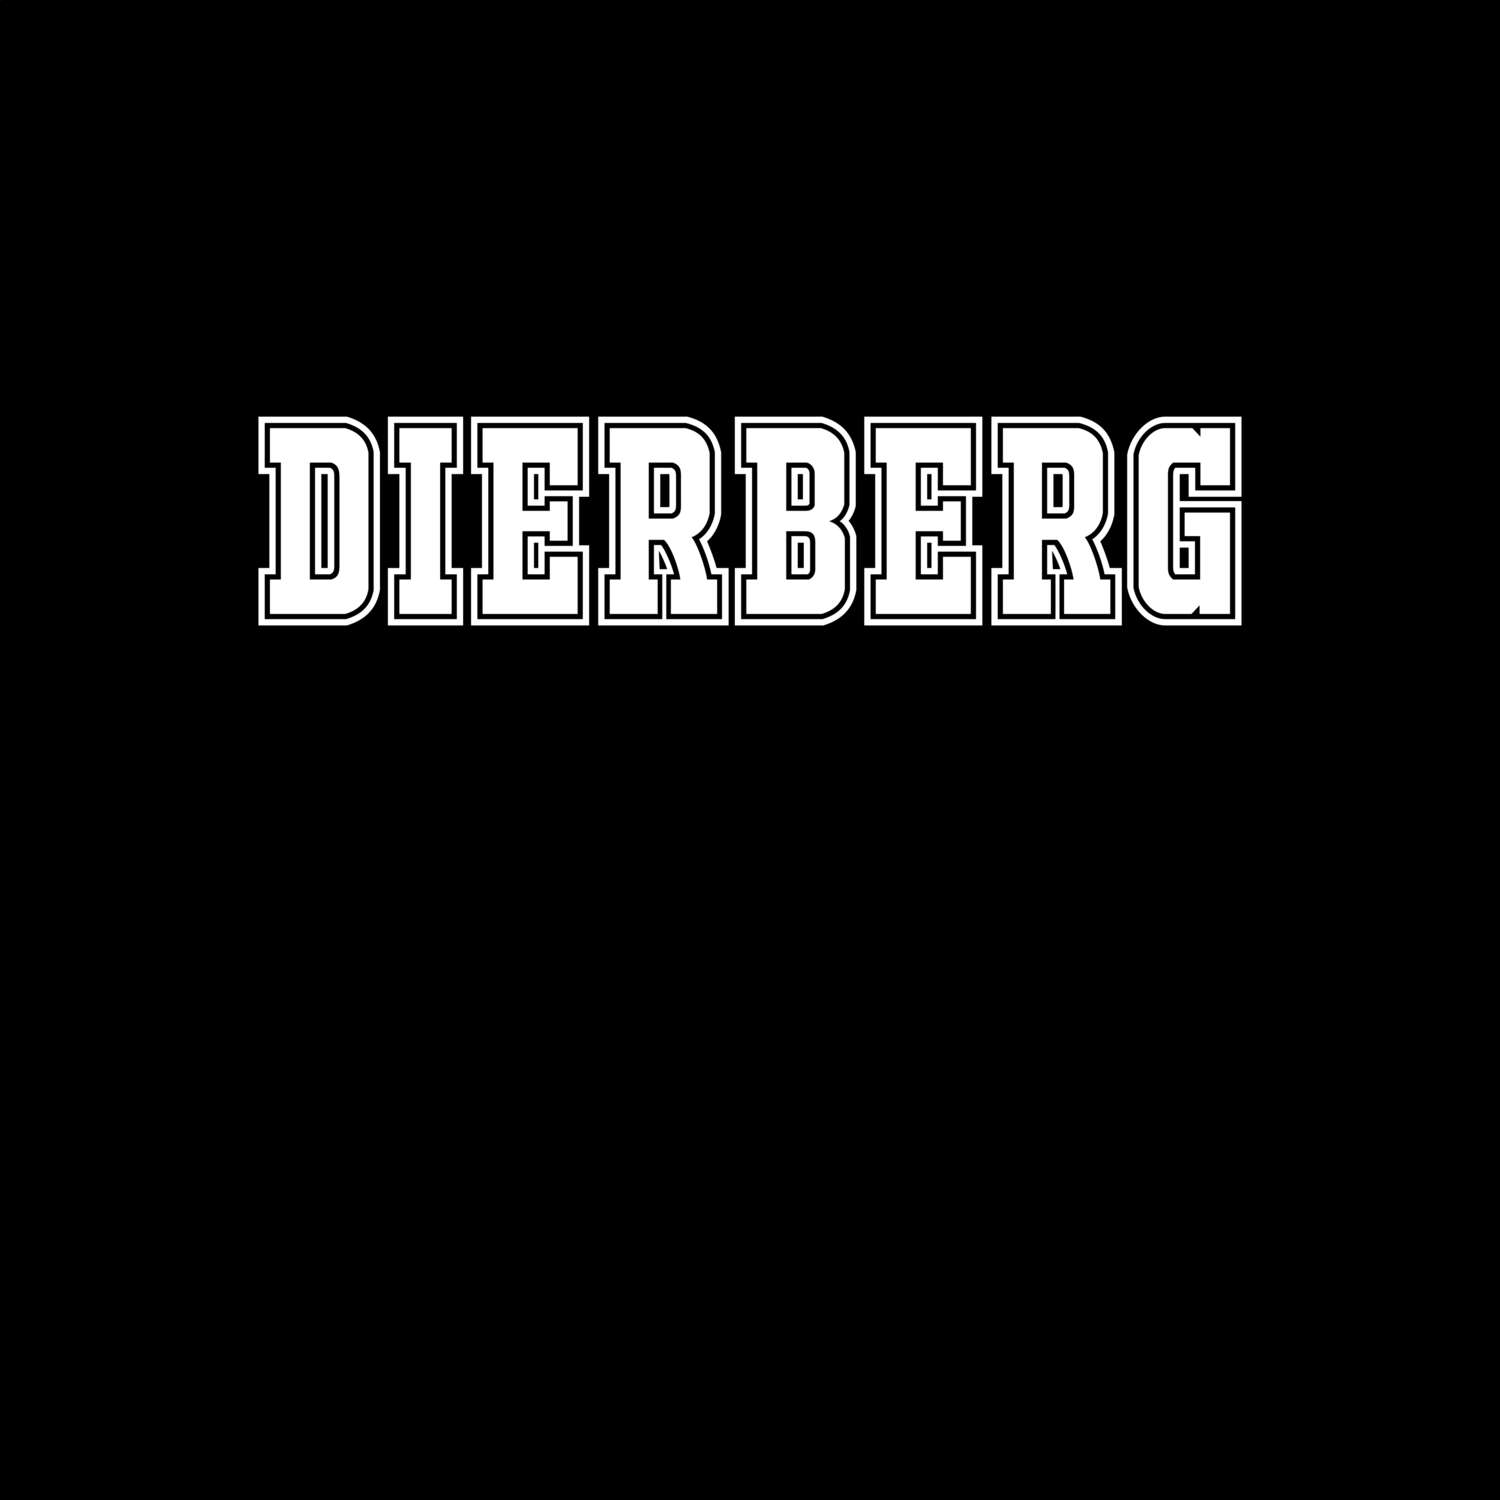 Dierberg T-Shirt »Classic«